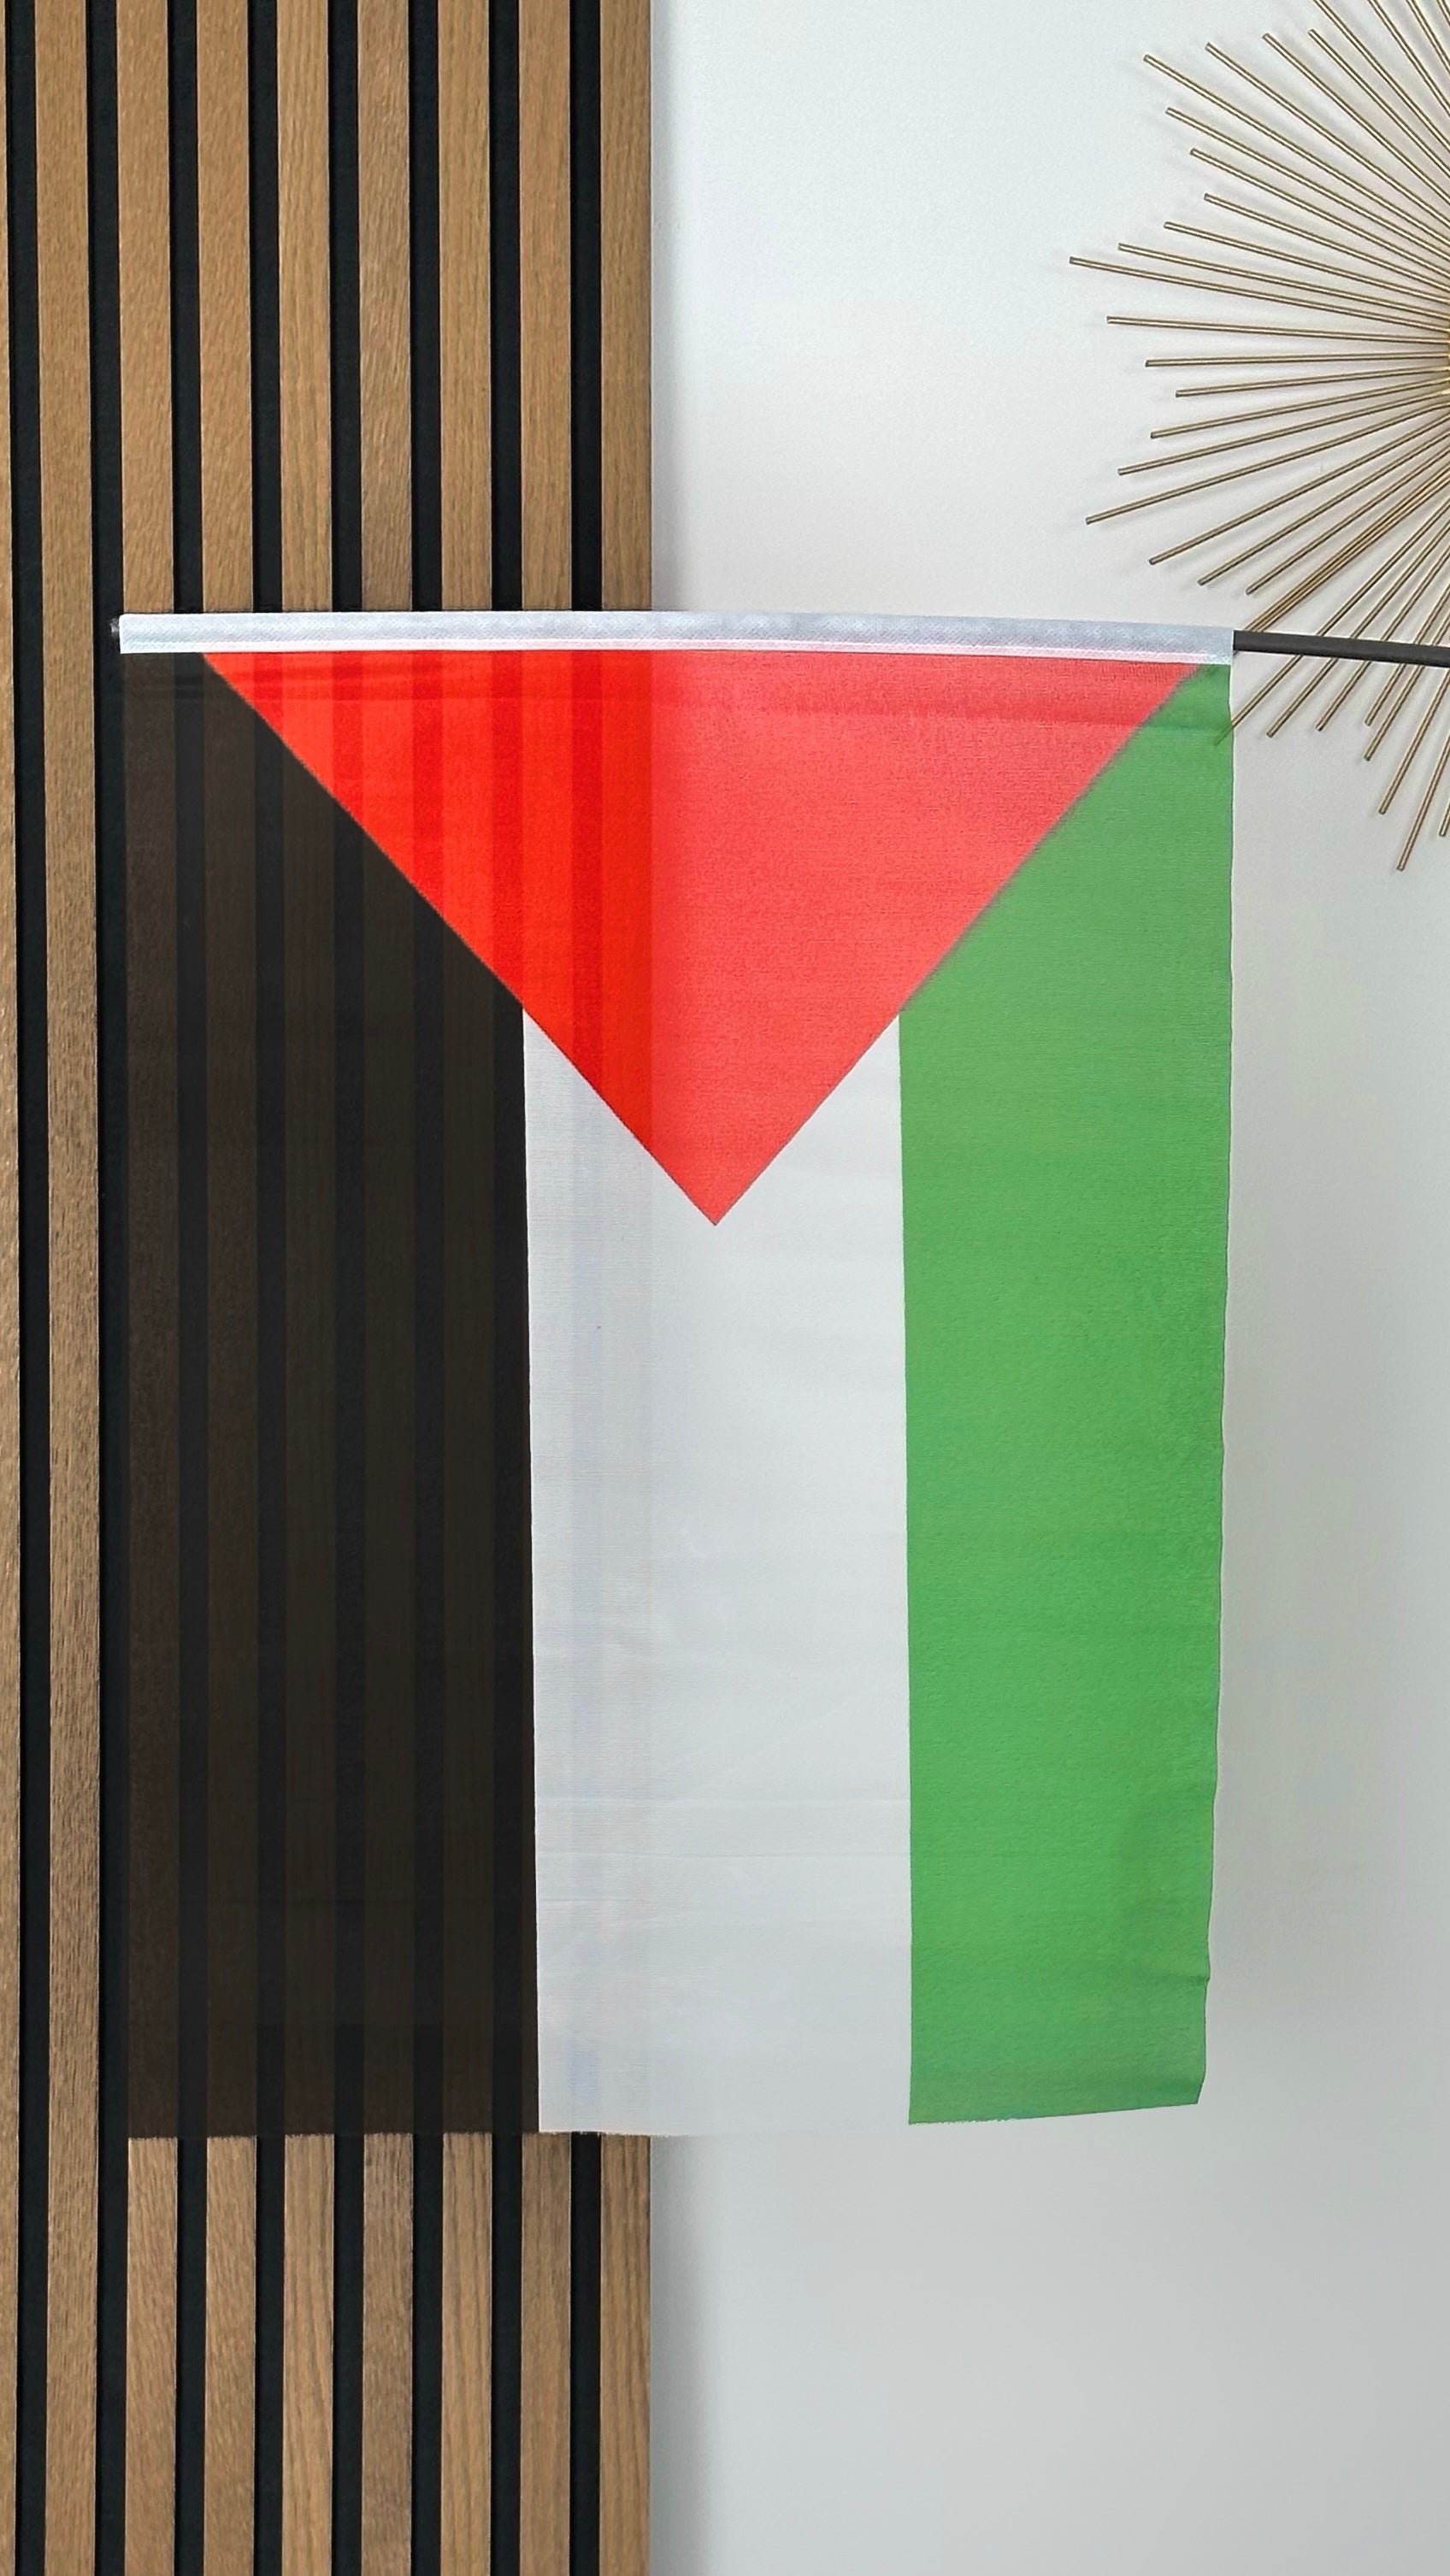 Palestine flag 🇵🇸